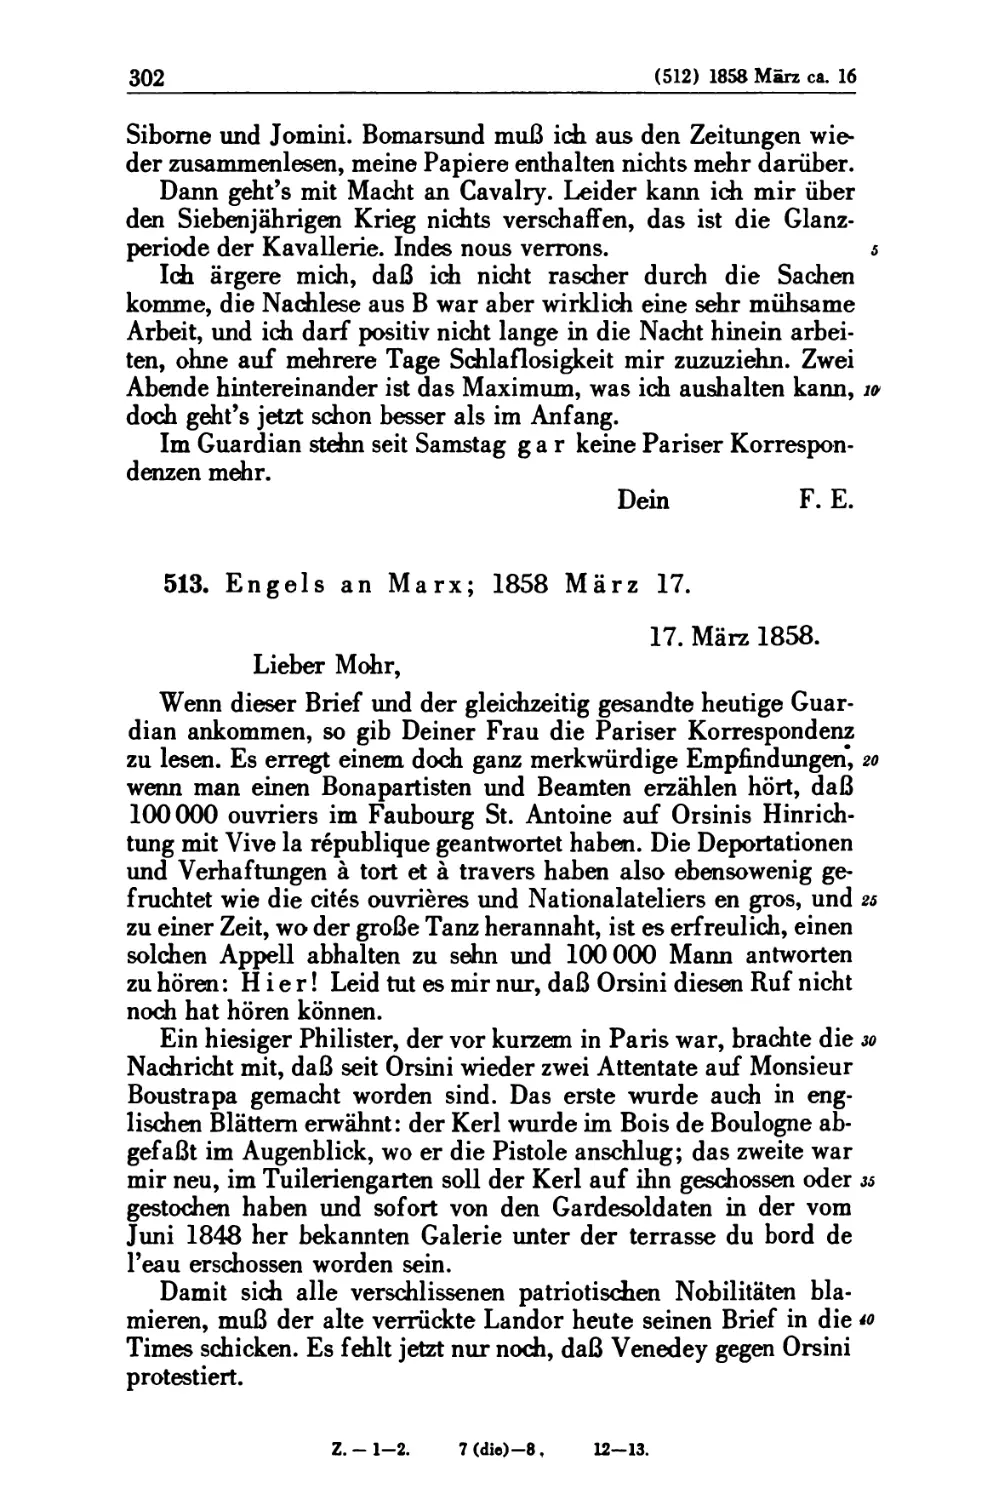 513. Engels an Marx; 1858 März 17